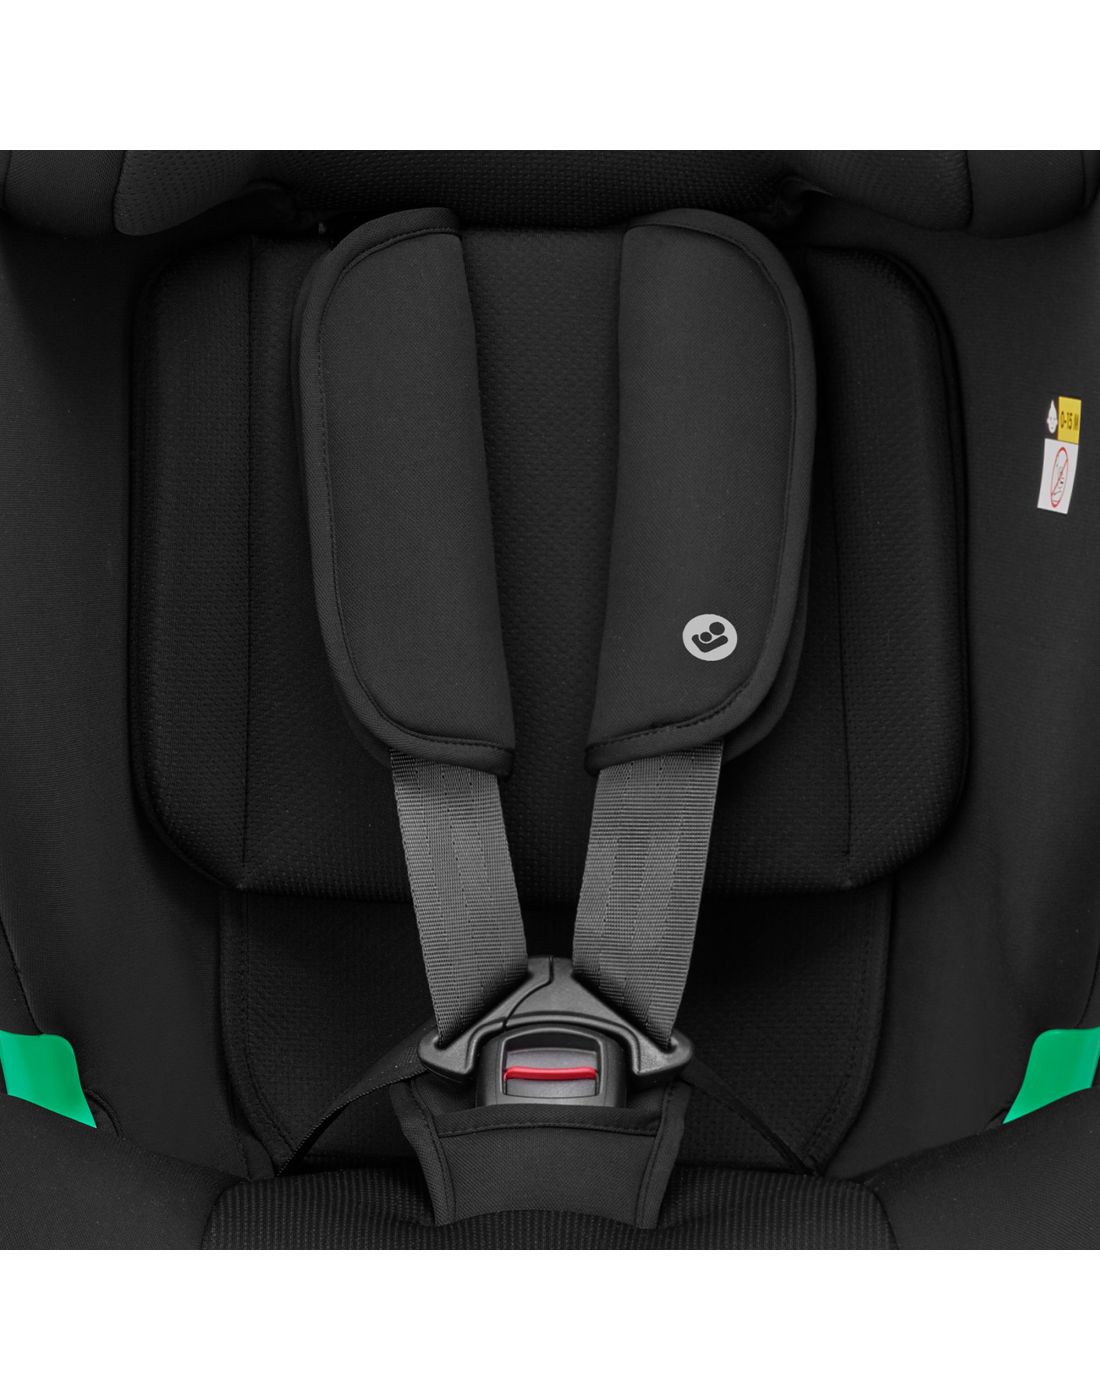 Maxi Cosi Kids Car Seat Titan i-Size Basic Black